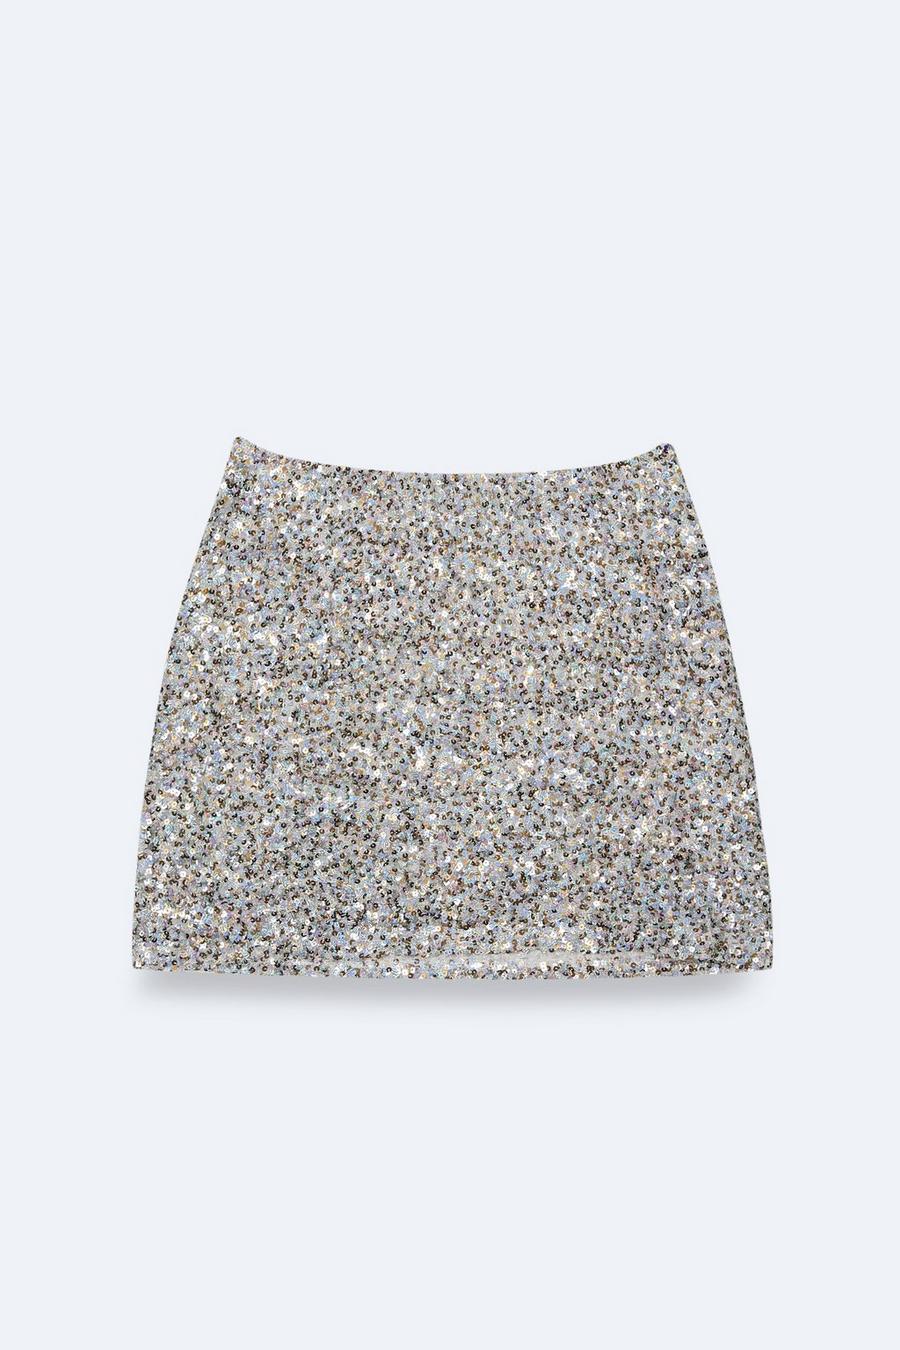 Plus Size Metallic Textured Mixed Sequin Mini Skirt